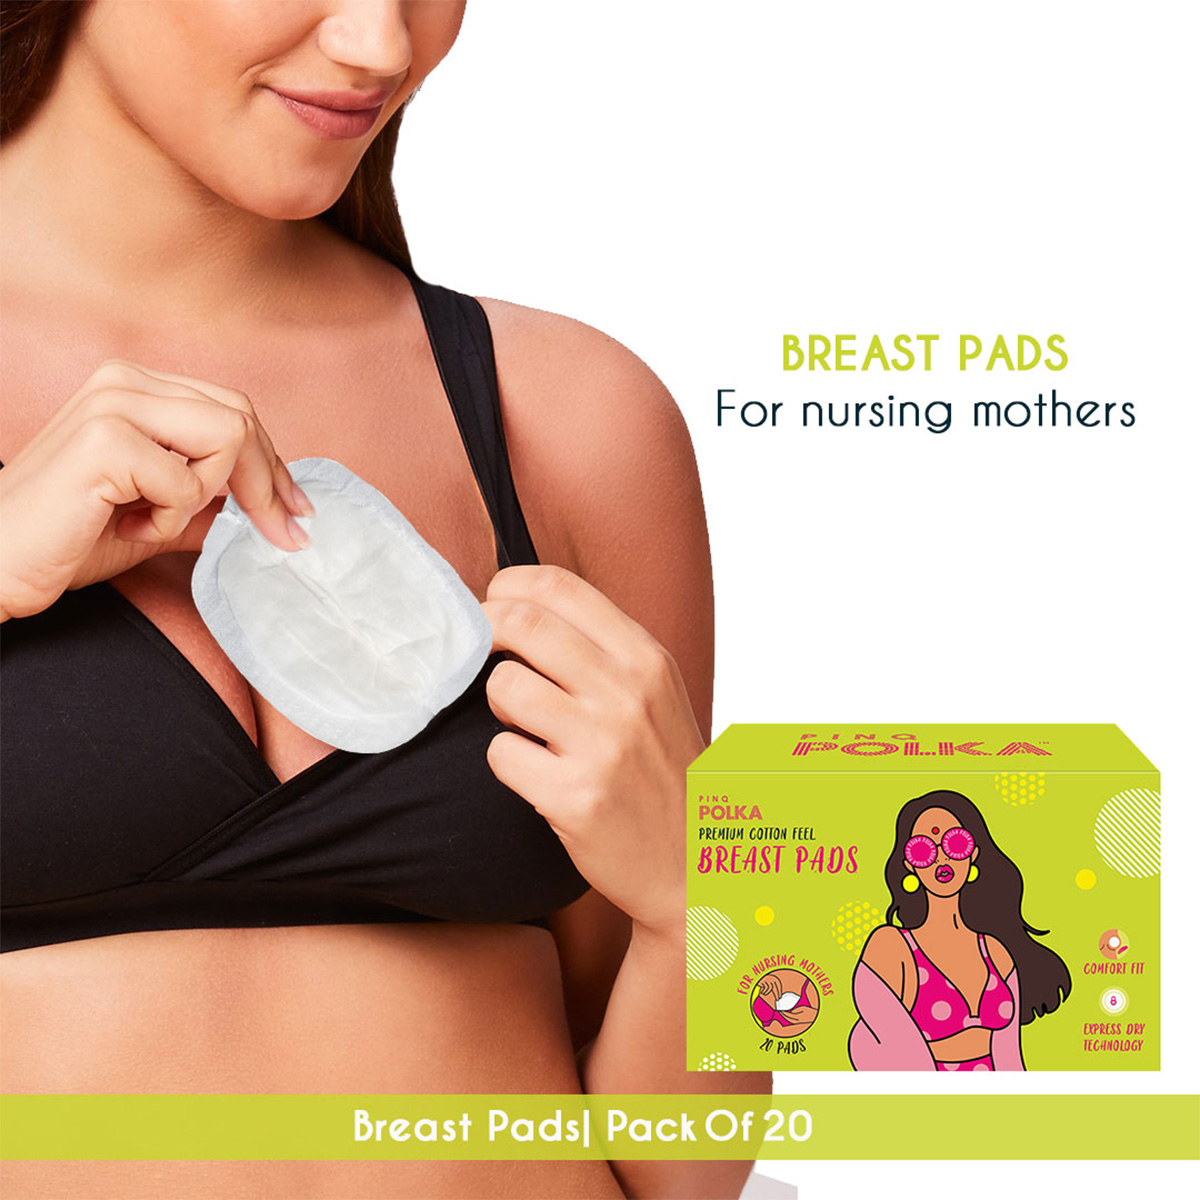 PINQ Polka Premium Organic Cotton Feel Super Absorbent Disposable Nursing Breast Pads-Pack of 20